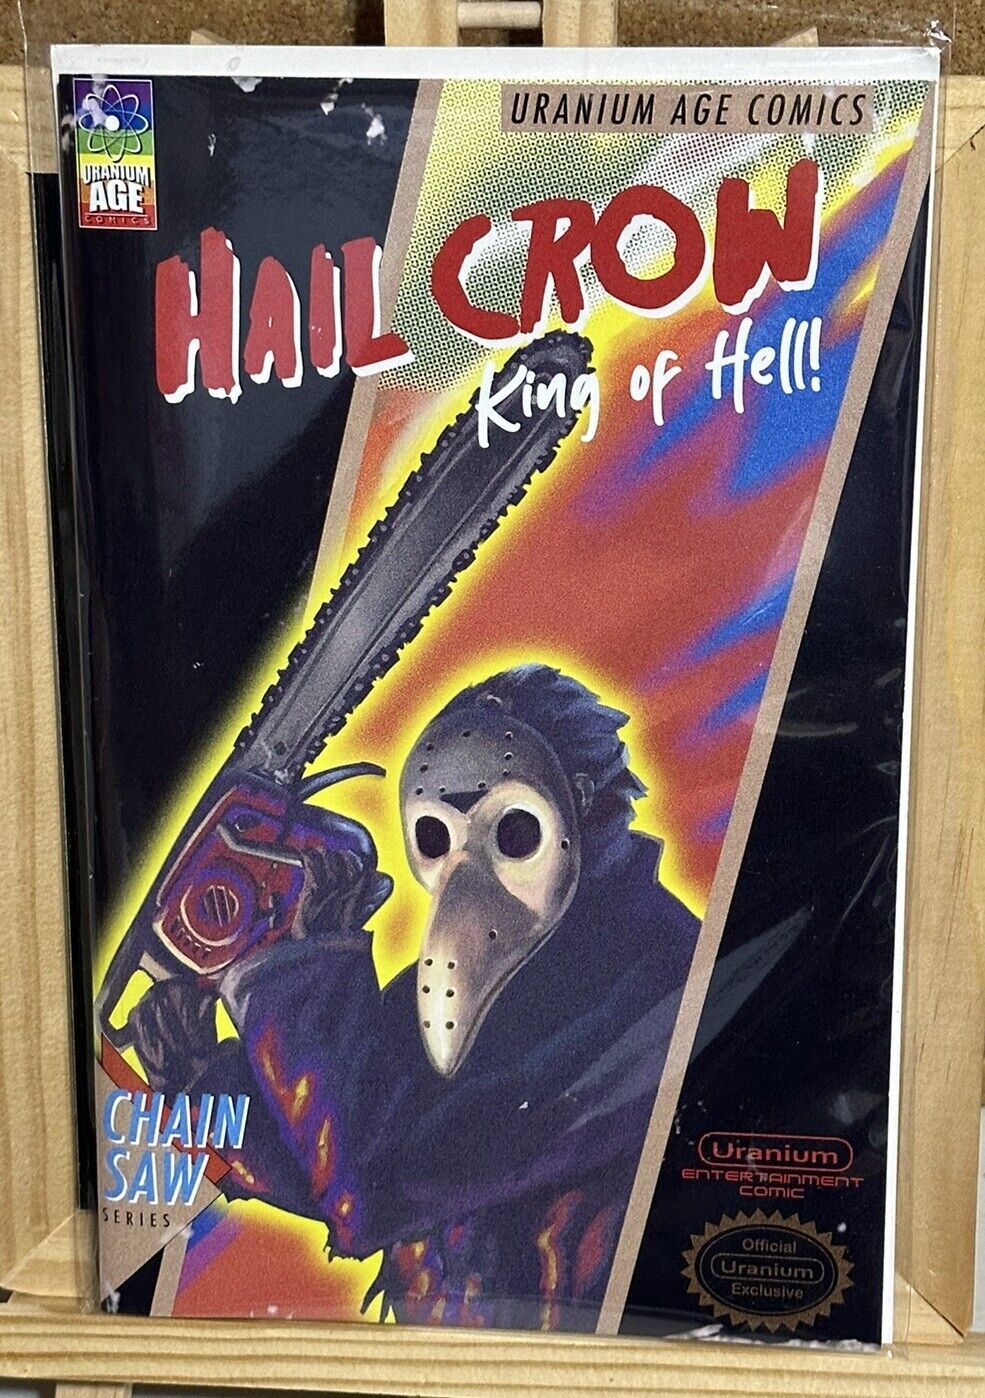 HAIL CROW KING OF HELL #1 CHAIN SAW SERIES COVER VARIANT B LTD EDITION PRINT /50